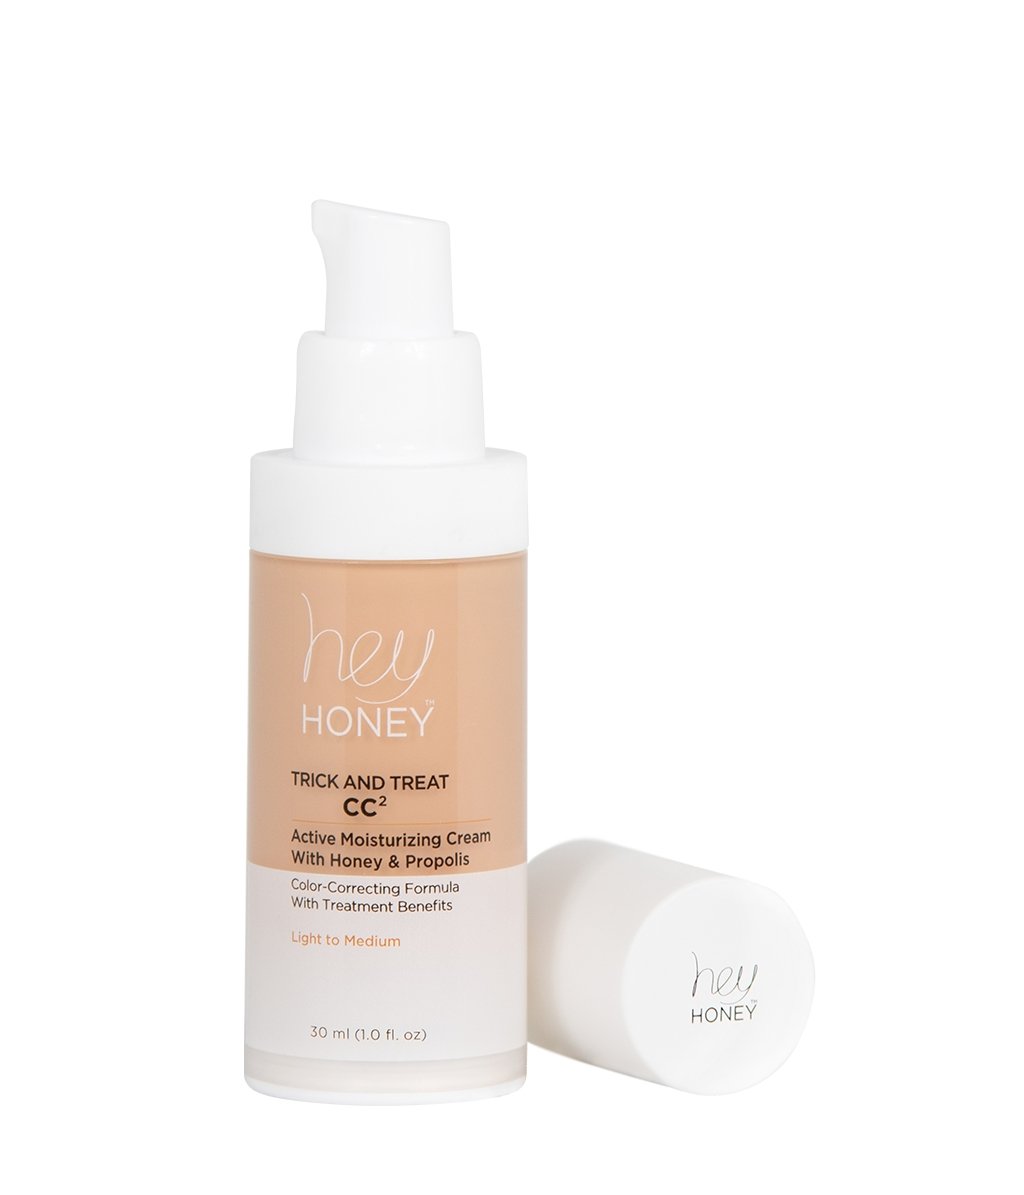 TRICK & TREAT CC² CREAM - Active Moisturizing Color Correcting Cream With Honey and Propolis - Hey Honey Skin Care